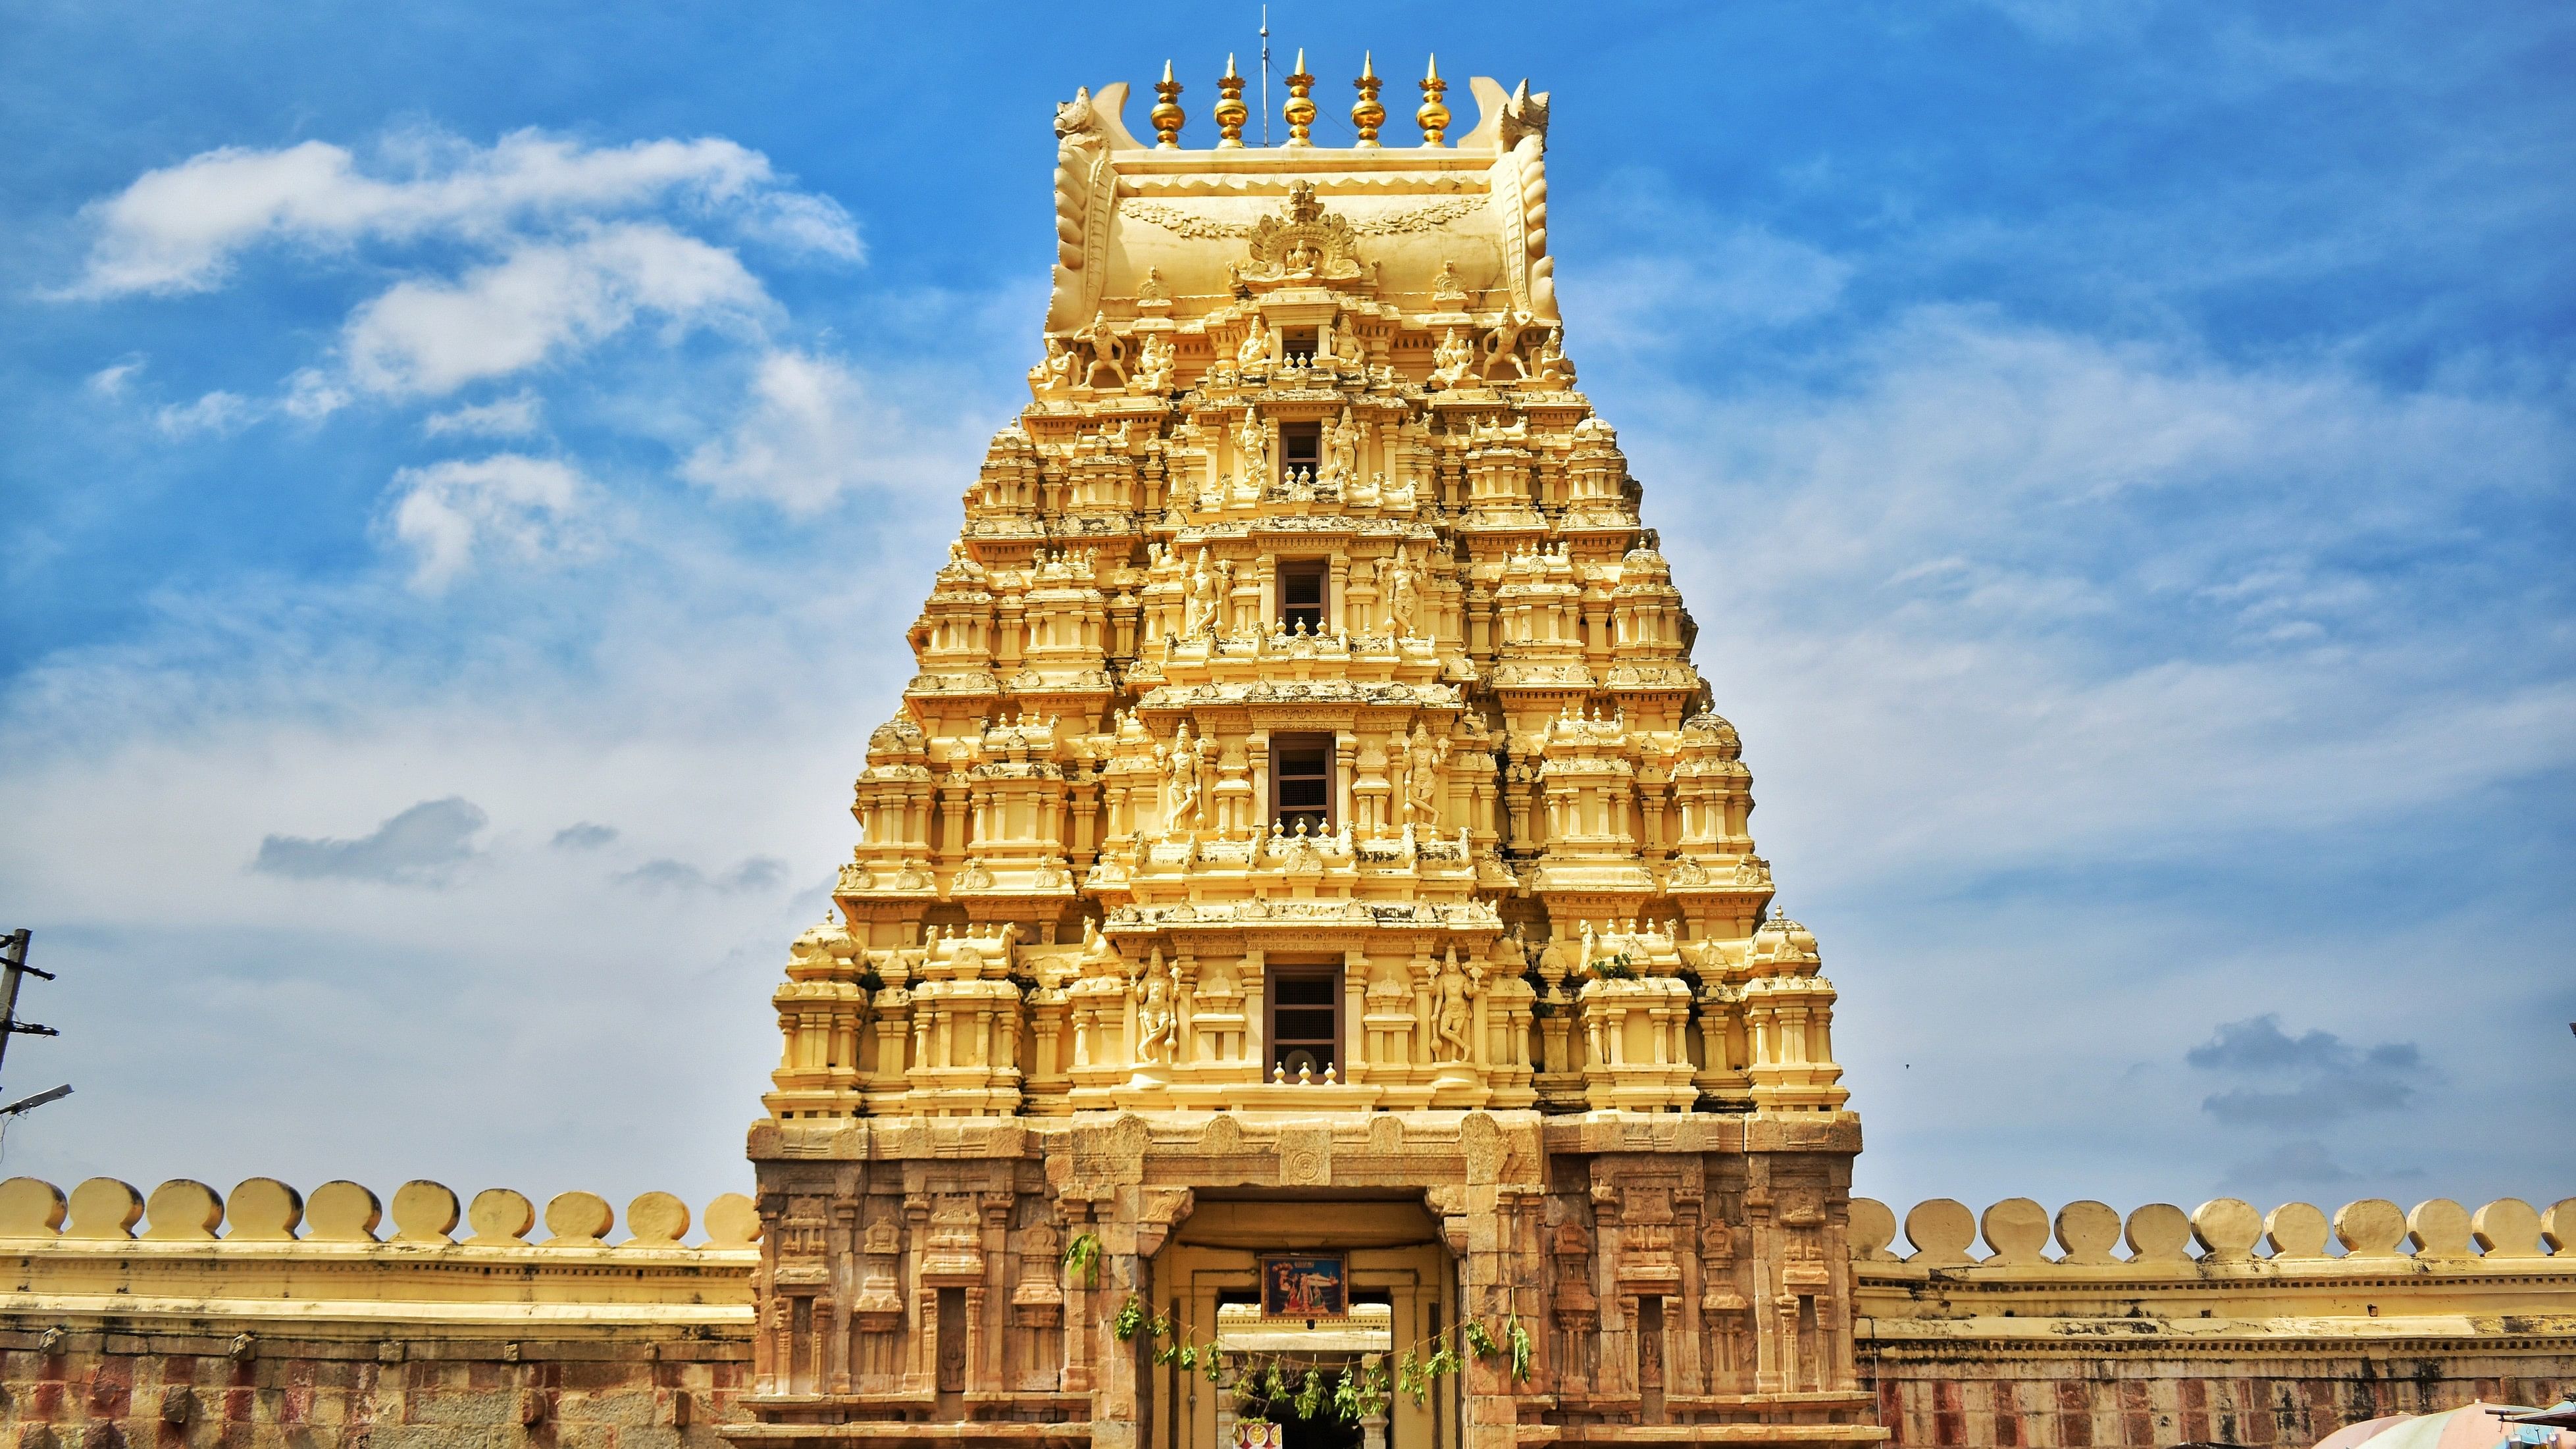 <div class="paragraphs"><p>Representative image showing a temple in Karnataka.</p></div>